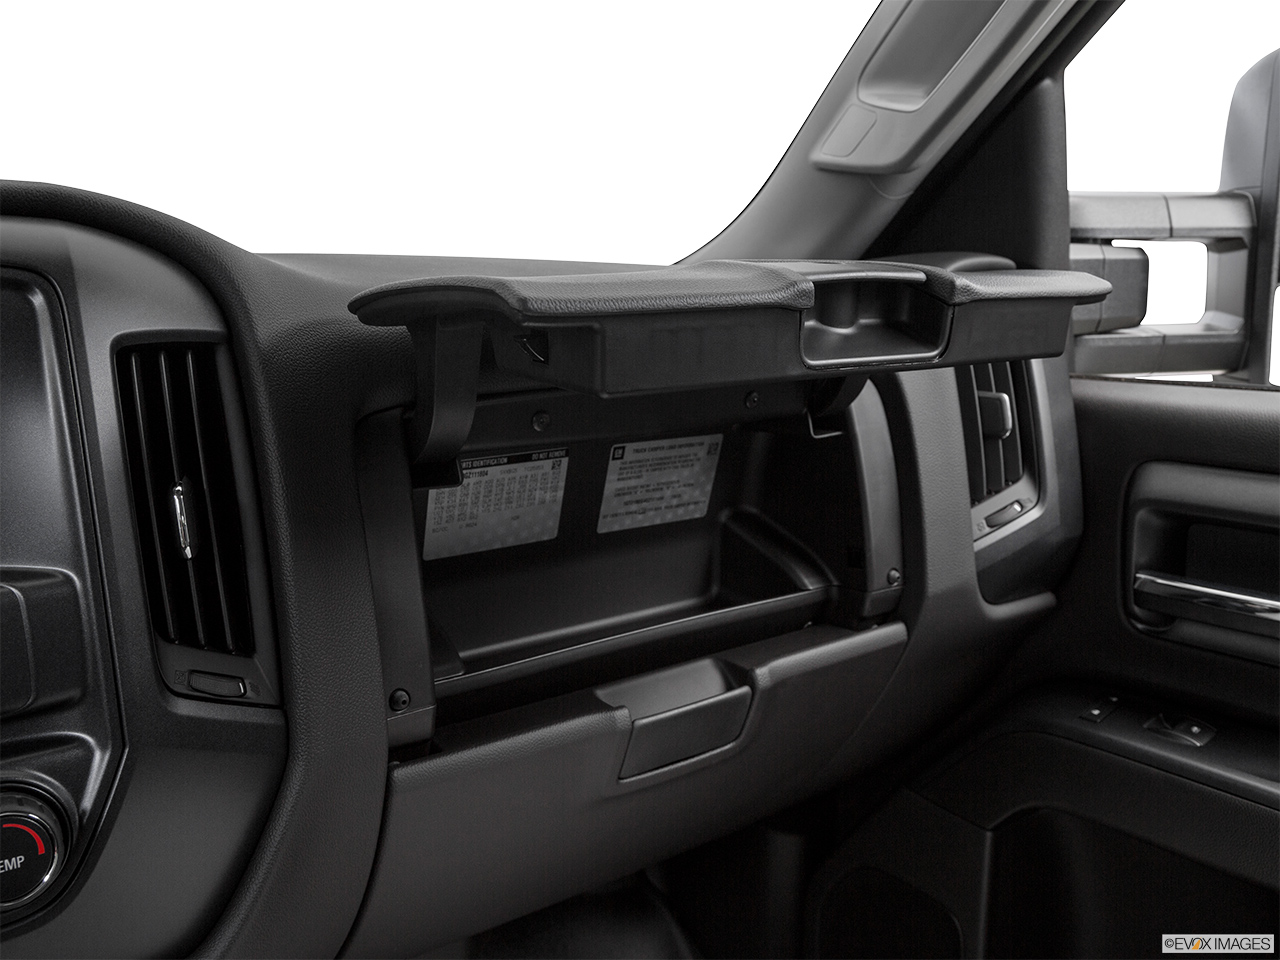 2016 GMC Sierra 2500HD Base Interior Bonus Shots (no set spec) 